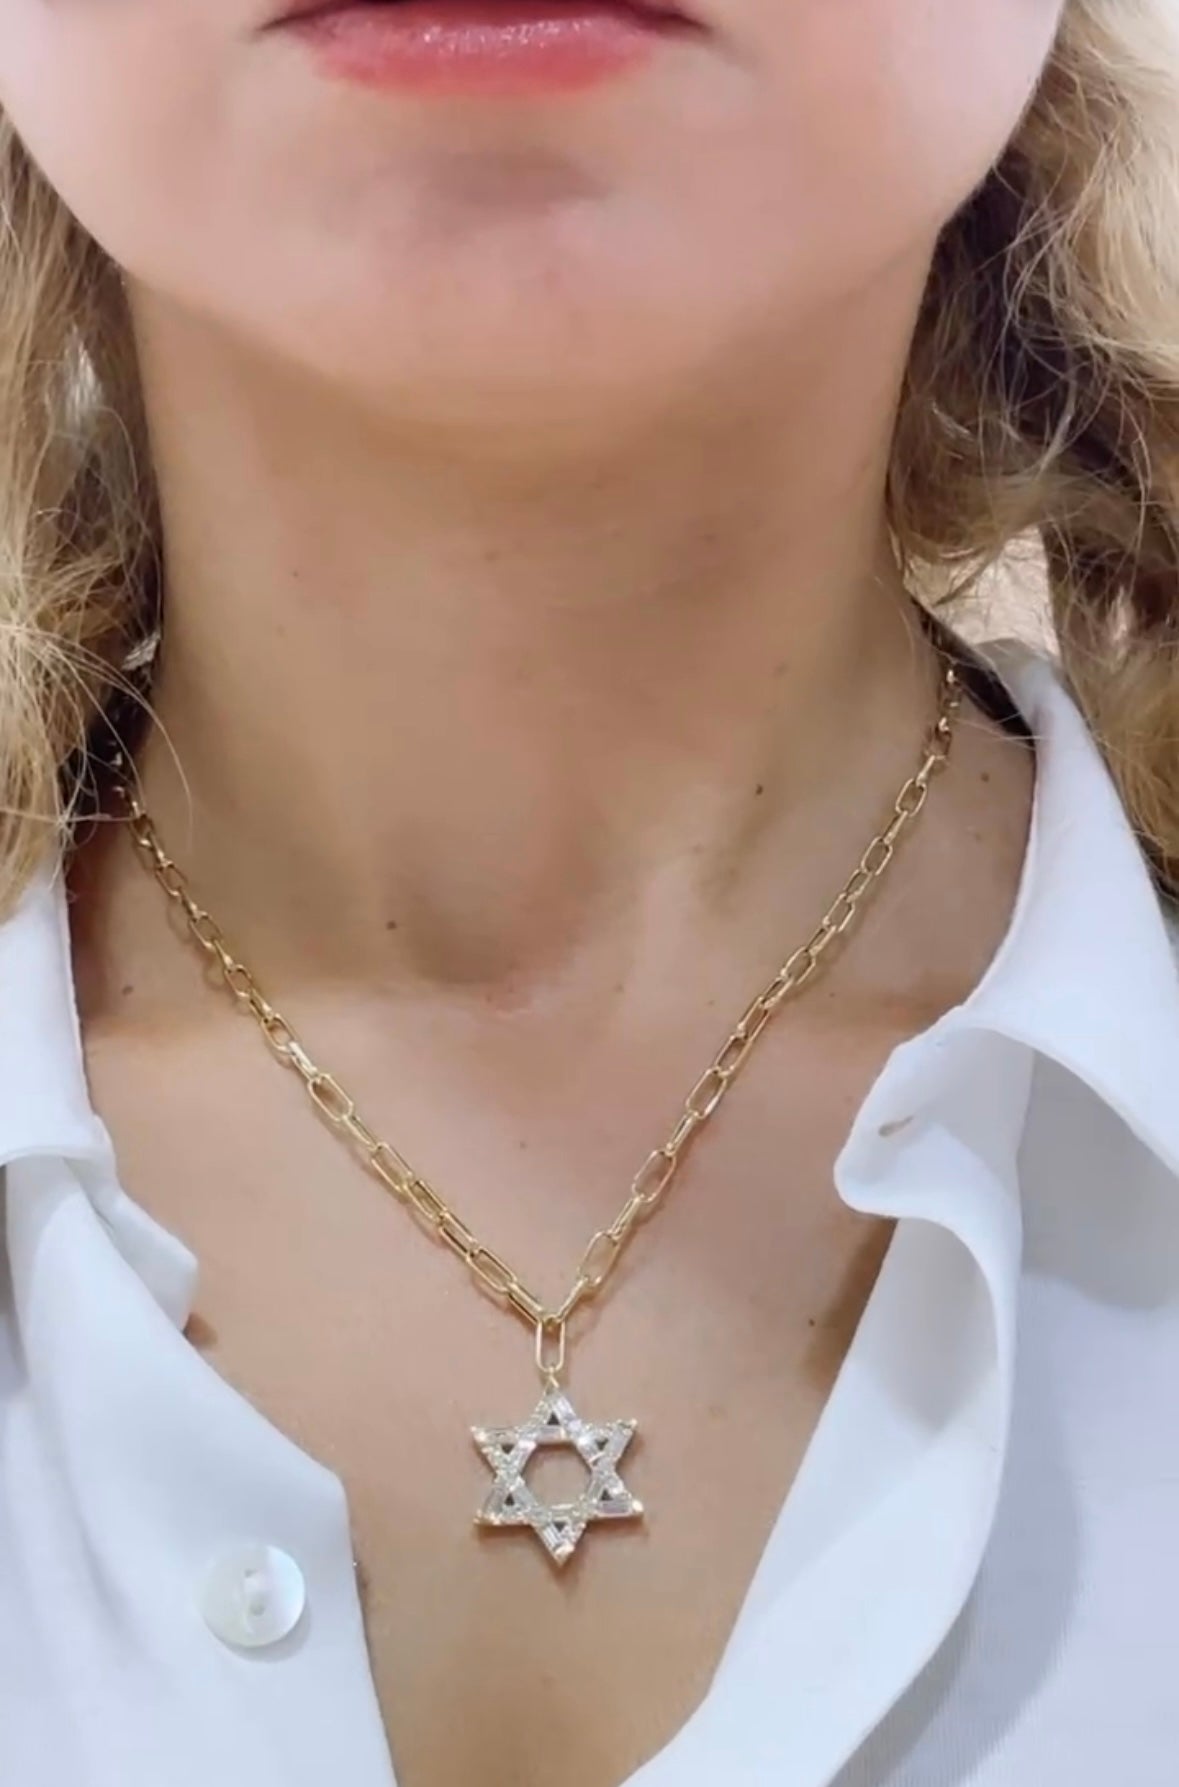 Diamond Mix Shape Star Of David Pendant Necklace.